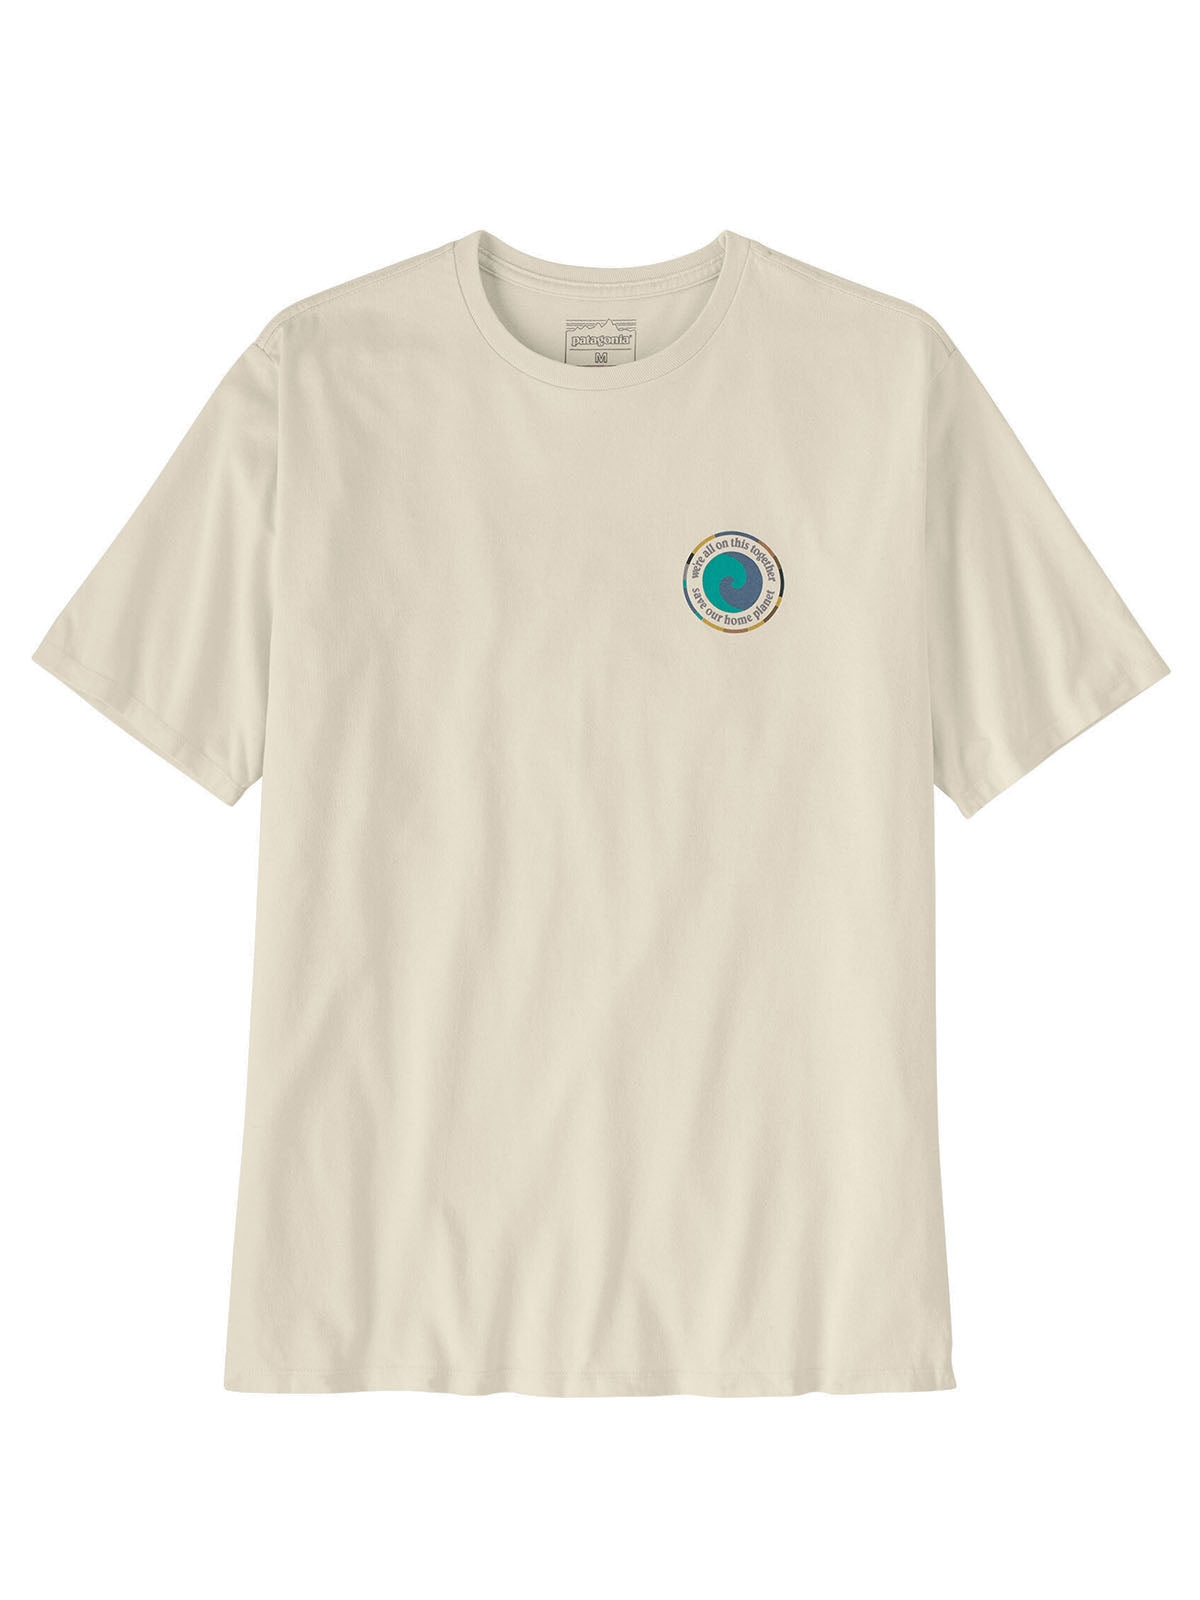 T-shirt Uomo Patagonia - Men's Unity Fritz Responsabili-Tee® - Avorio